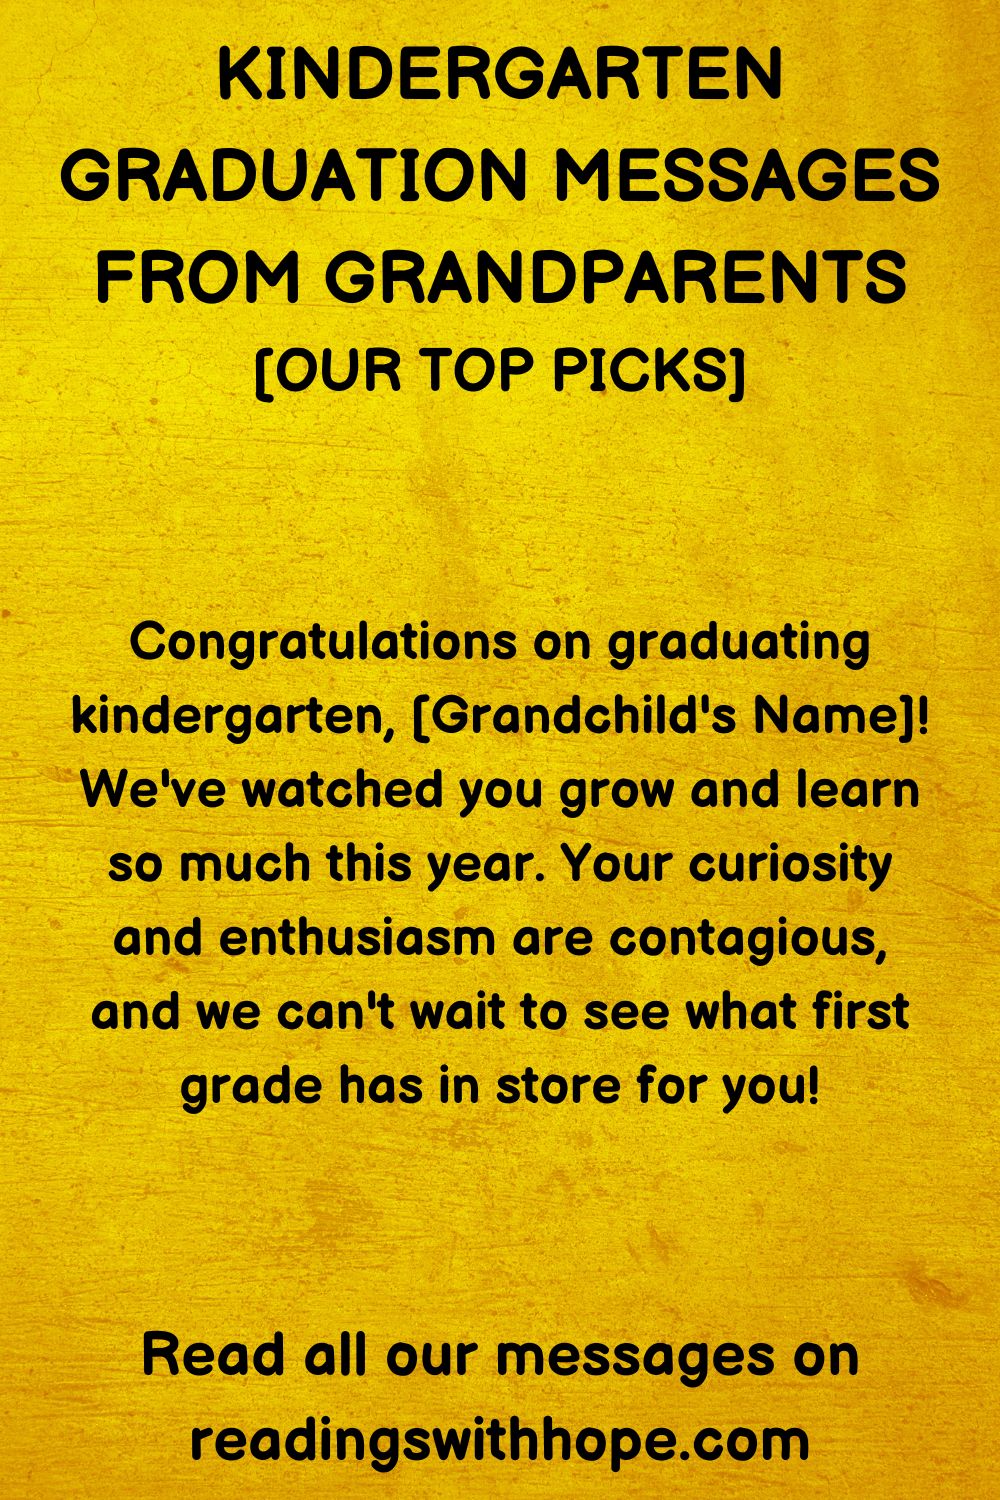 72 Kindergarten Graduation Messages and Wishes